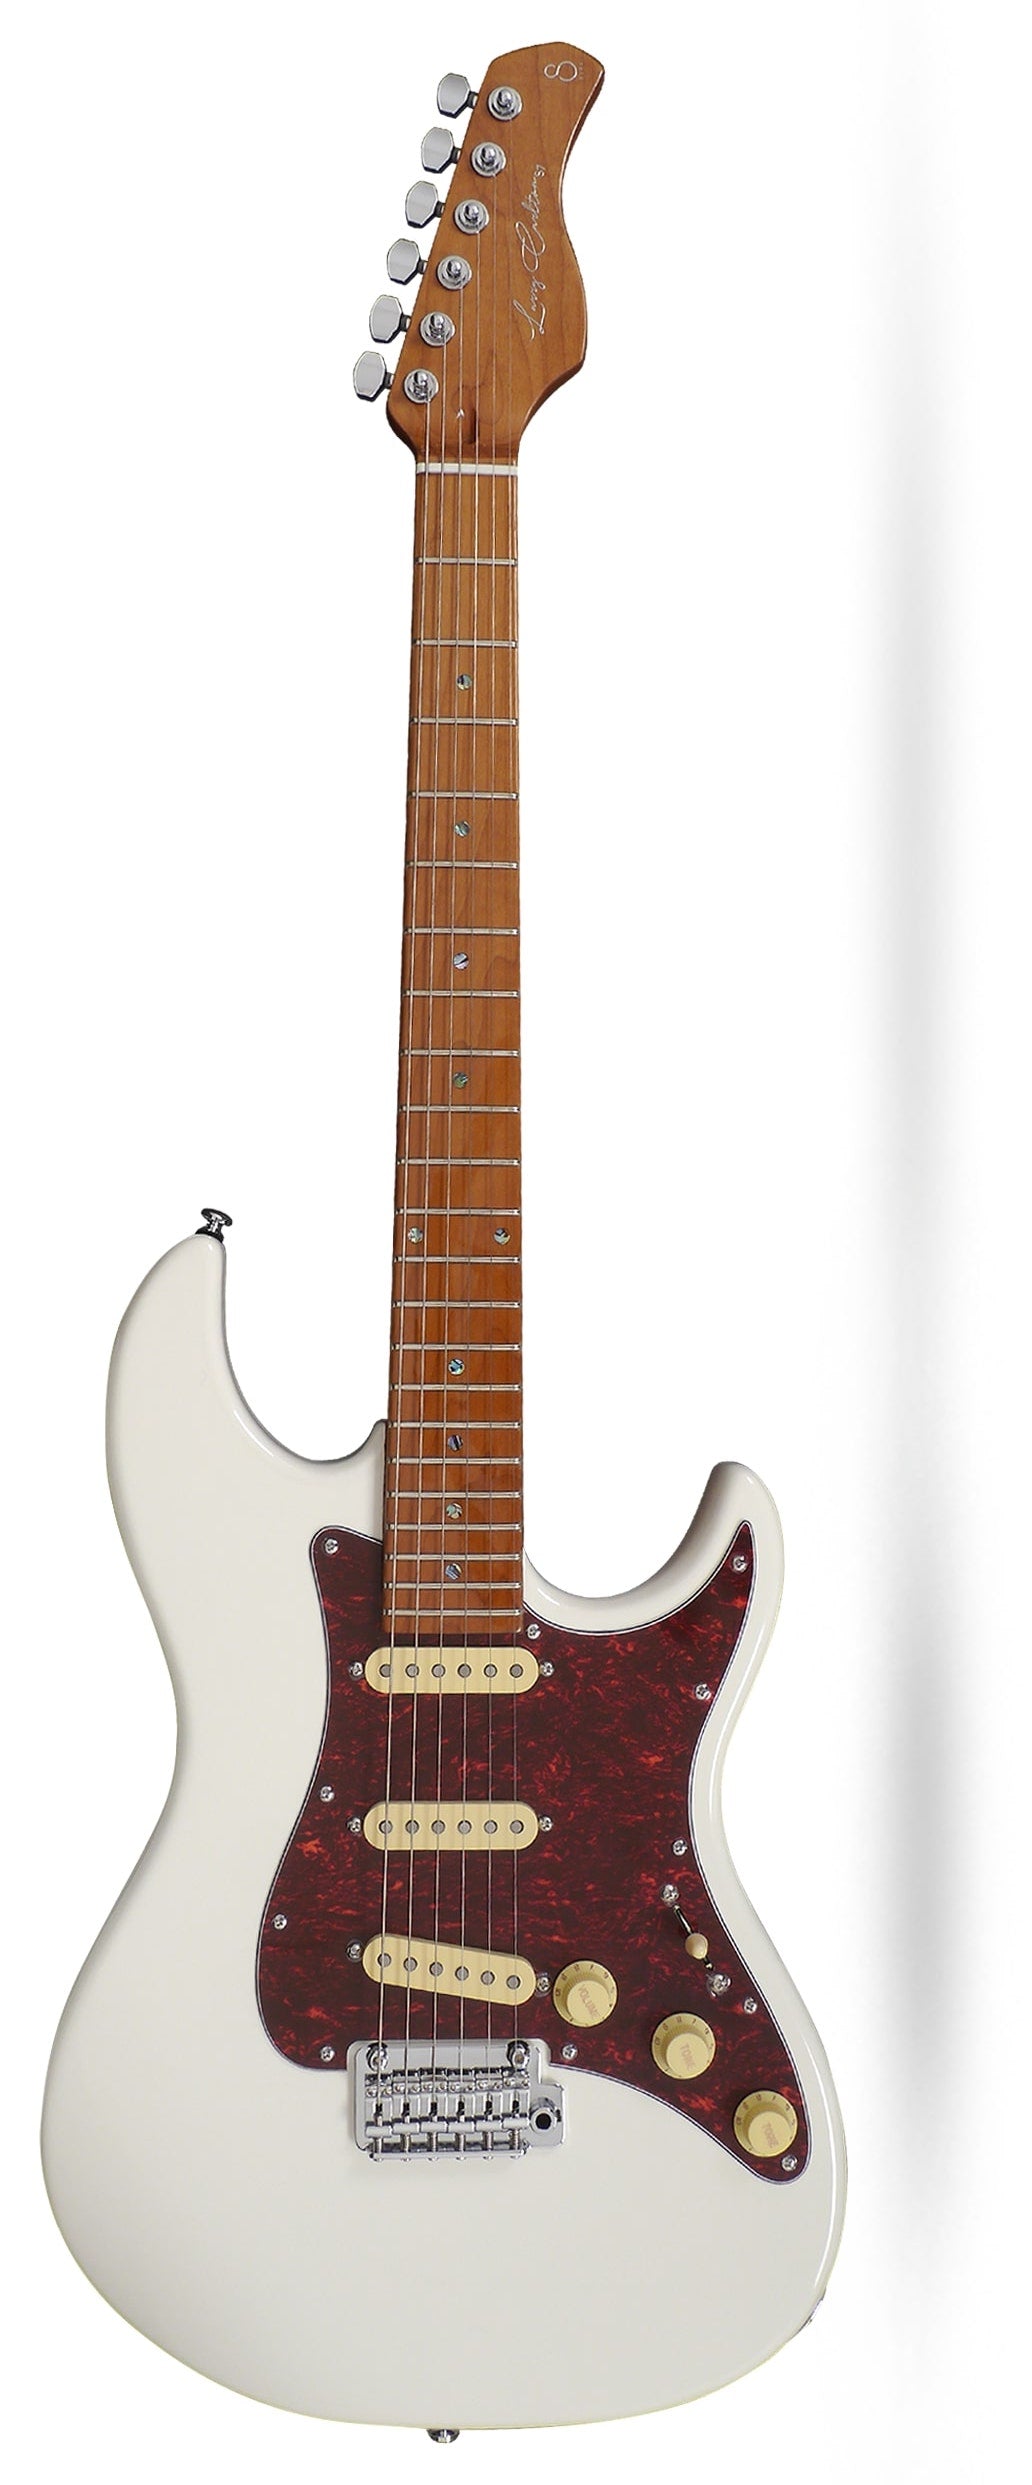 Larry Carlton S7 Vintage Sire Electric Guitar - Antique White